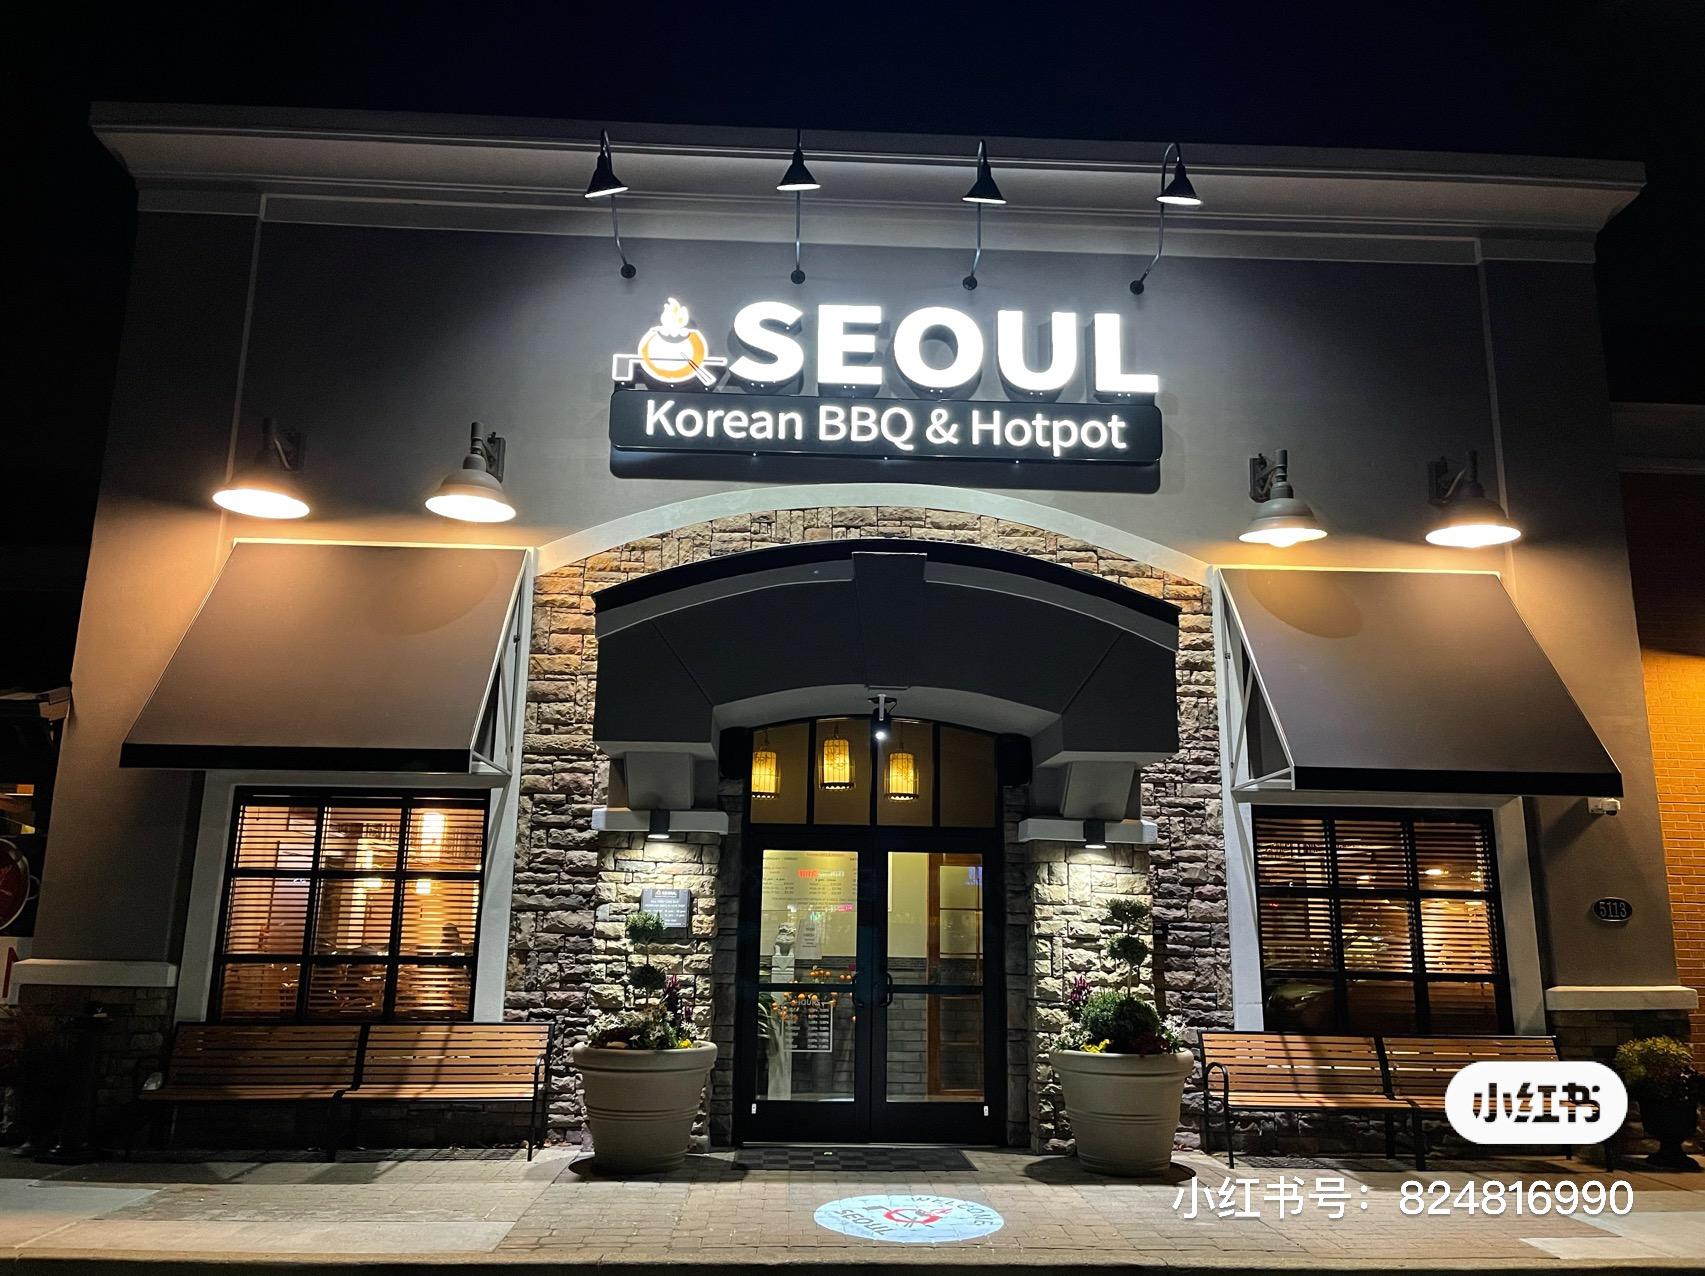 Seoul Korean BBQ & Hotpot | restaurant | 5113 Bowen Dr, Mason, OH 45040, United States | 5134861668 OR +1 513-486-1668